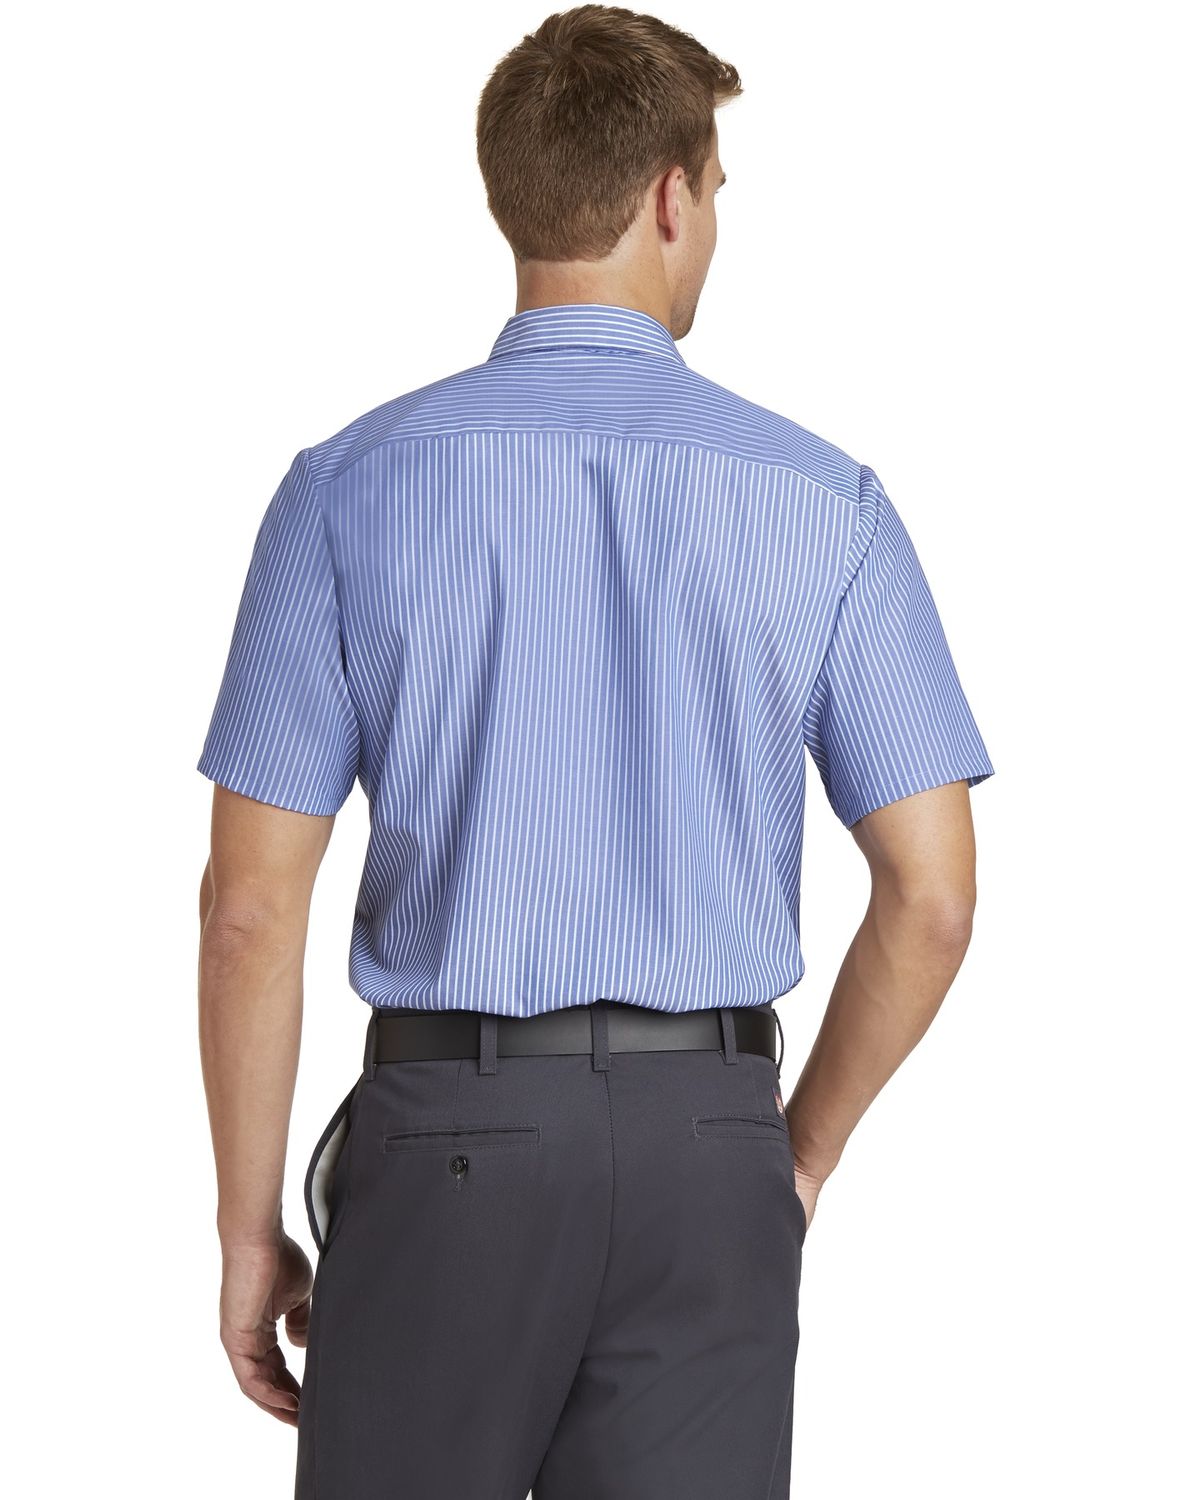 'Red Kap SP20 Premium Short Sleeve Work Shirt'